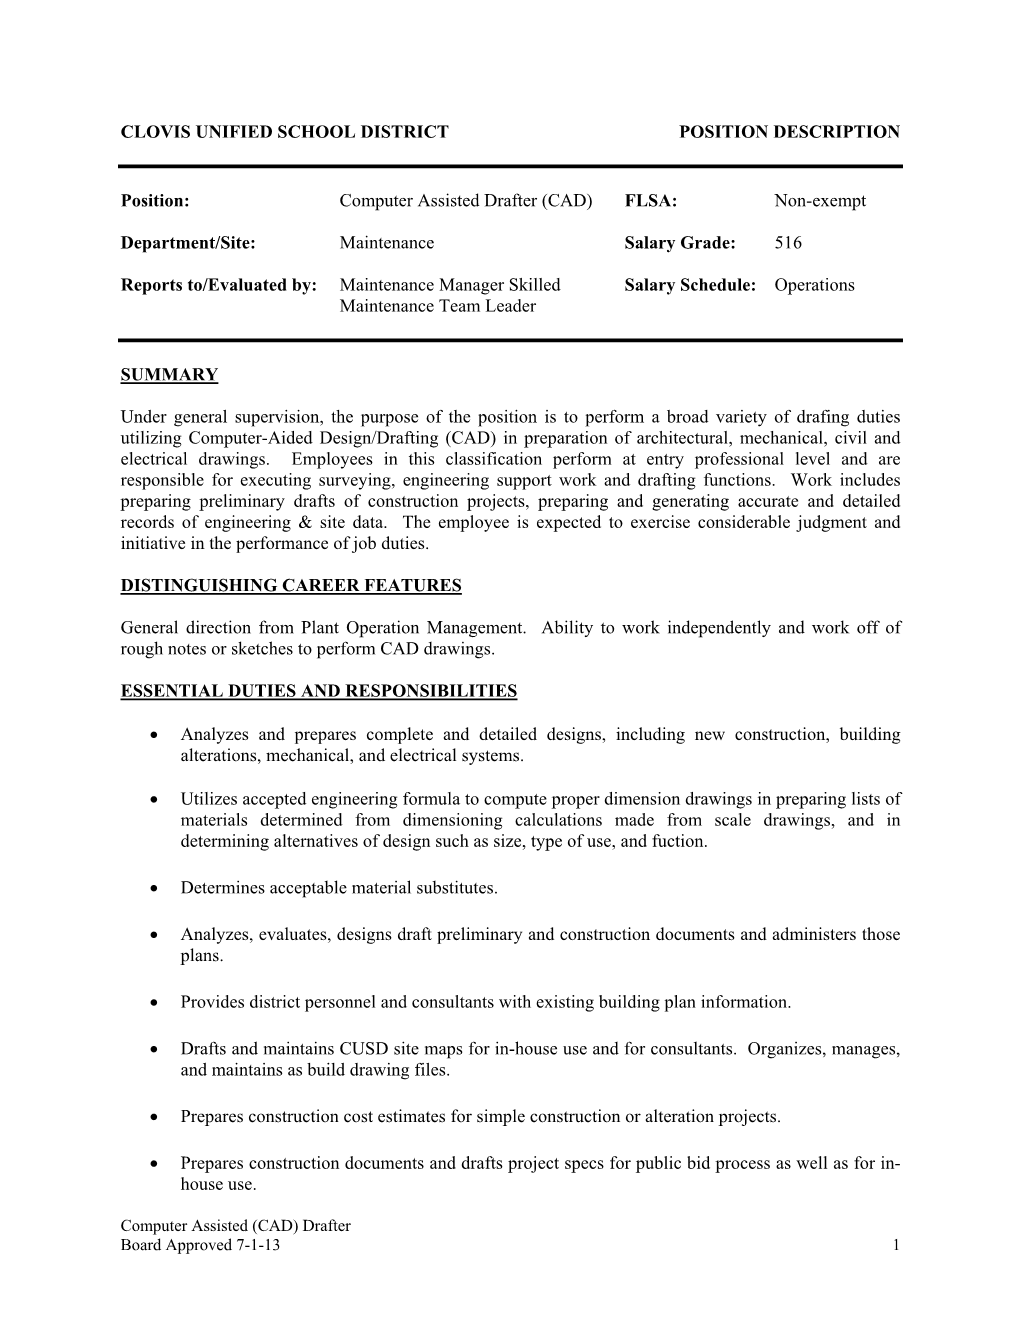 Computer Assisted Drafter (CAD) FLSA: Non-Exempt